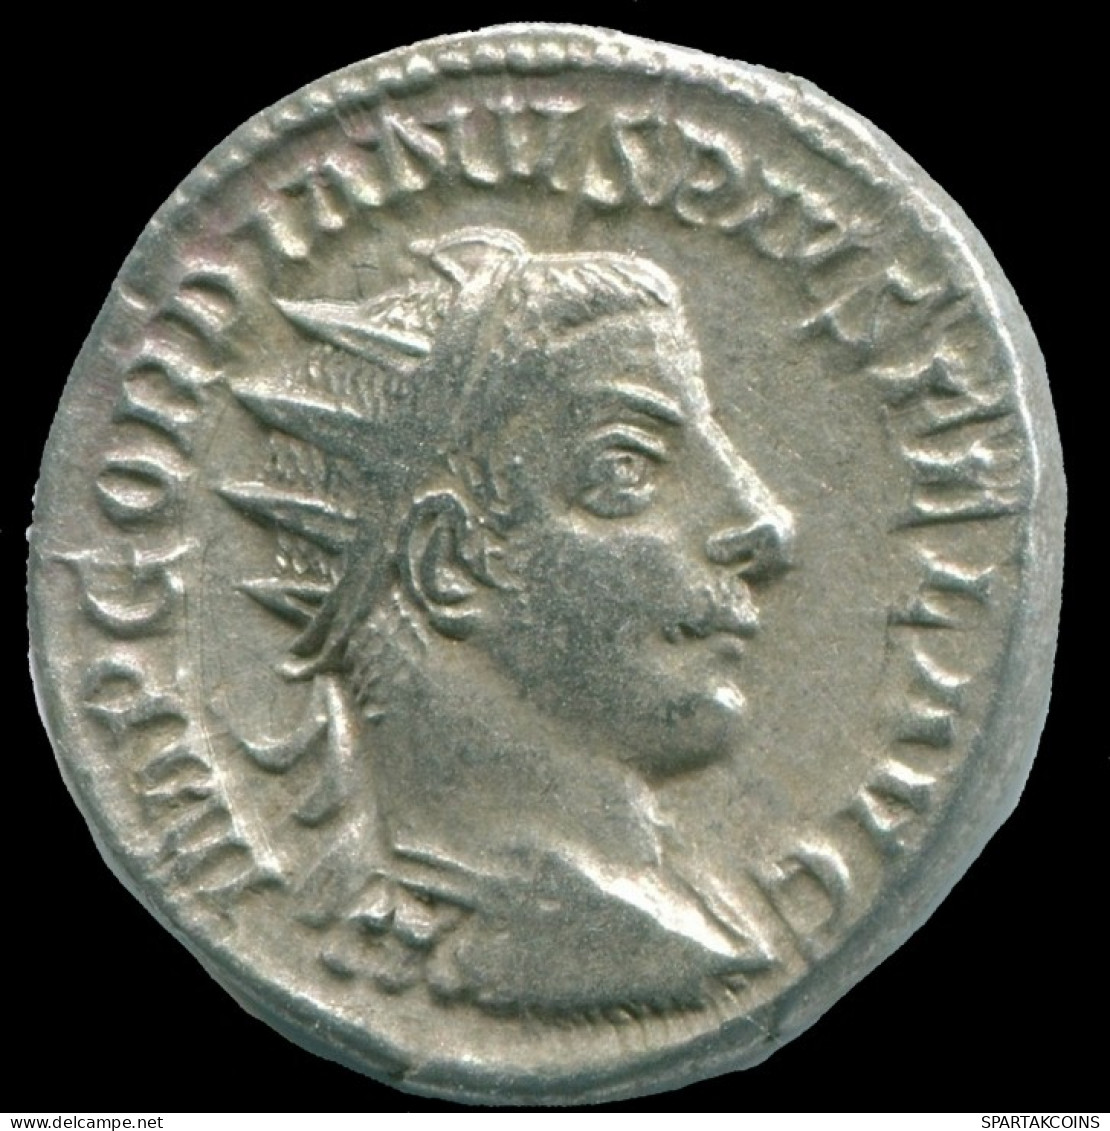 GORDIAN III AR ANTONINIANUS ANTIOCH Mint AD 243 FORTVNA REDVX #ANC13161.35.D.A - L'Anarchie Militaire (235 à 284)